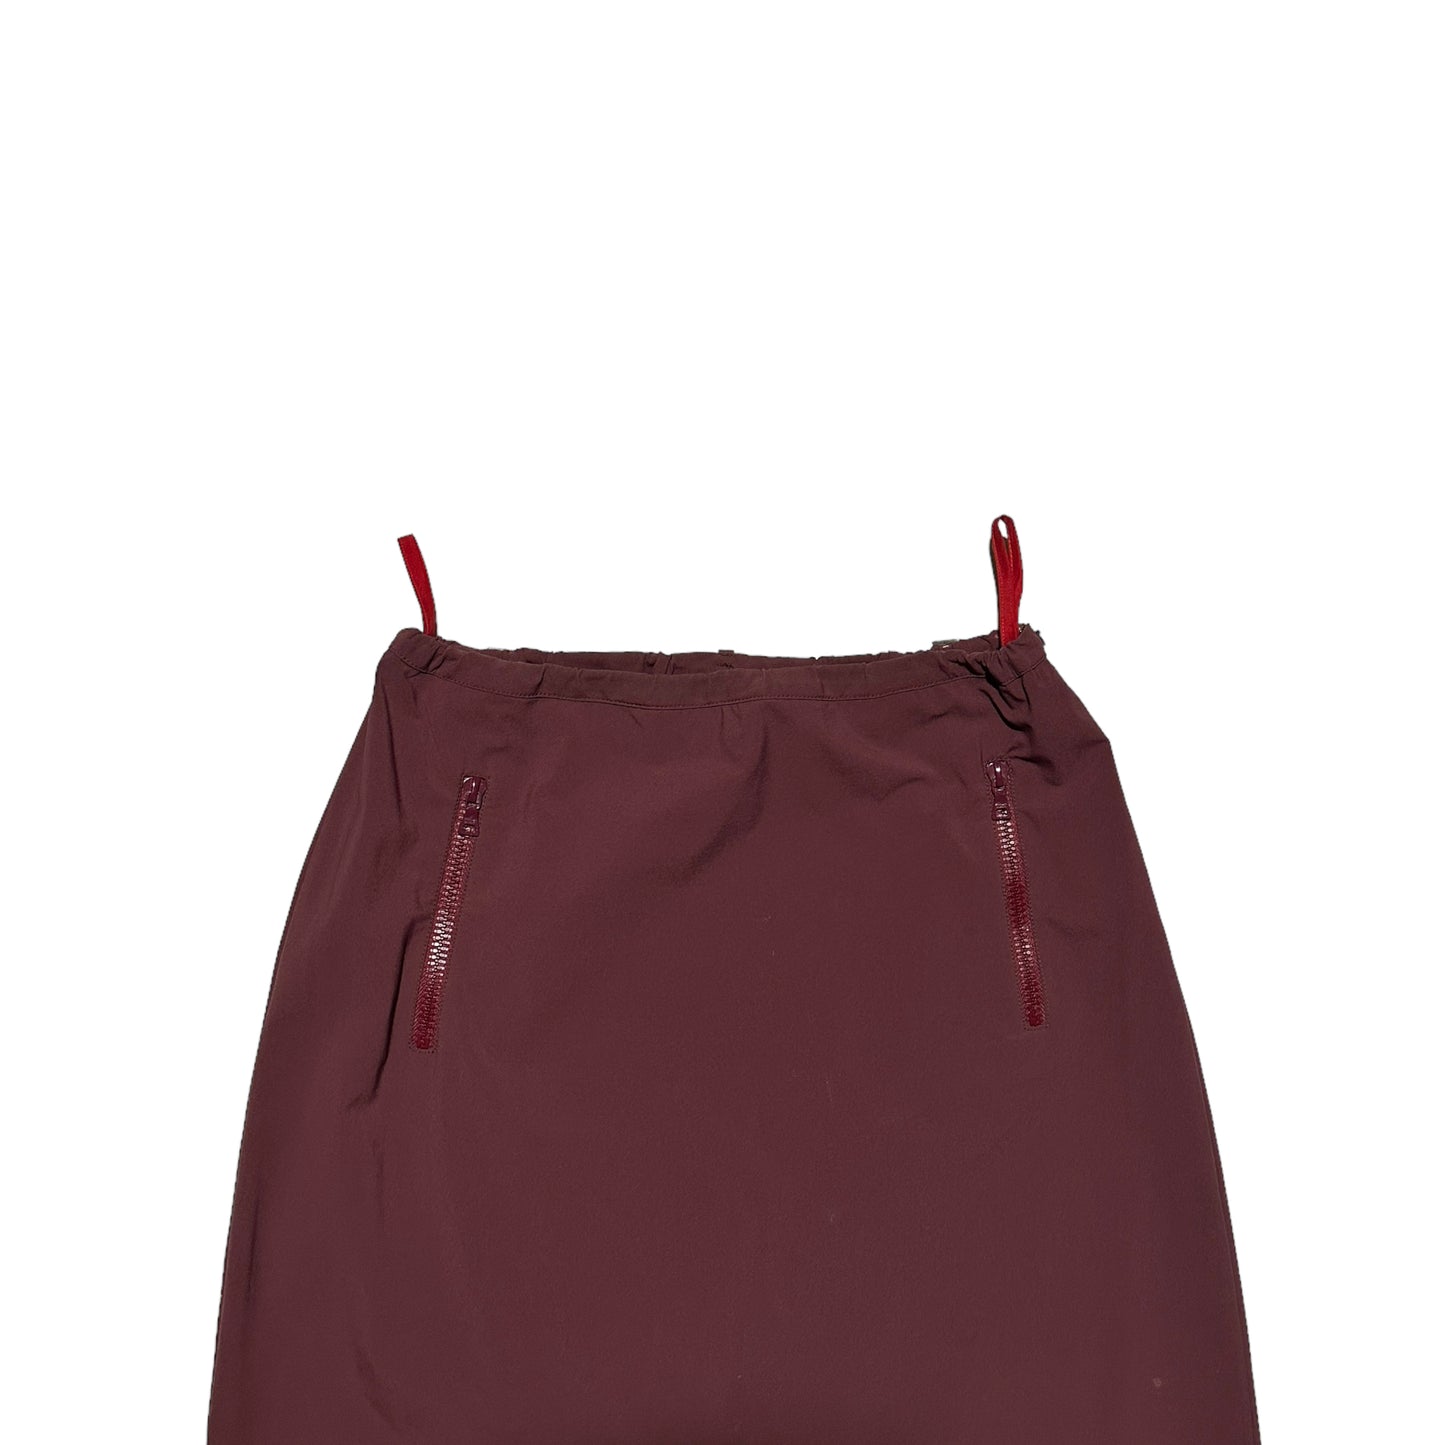 S/S 2000 Prada Sport Belt Skirt (34W)